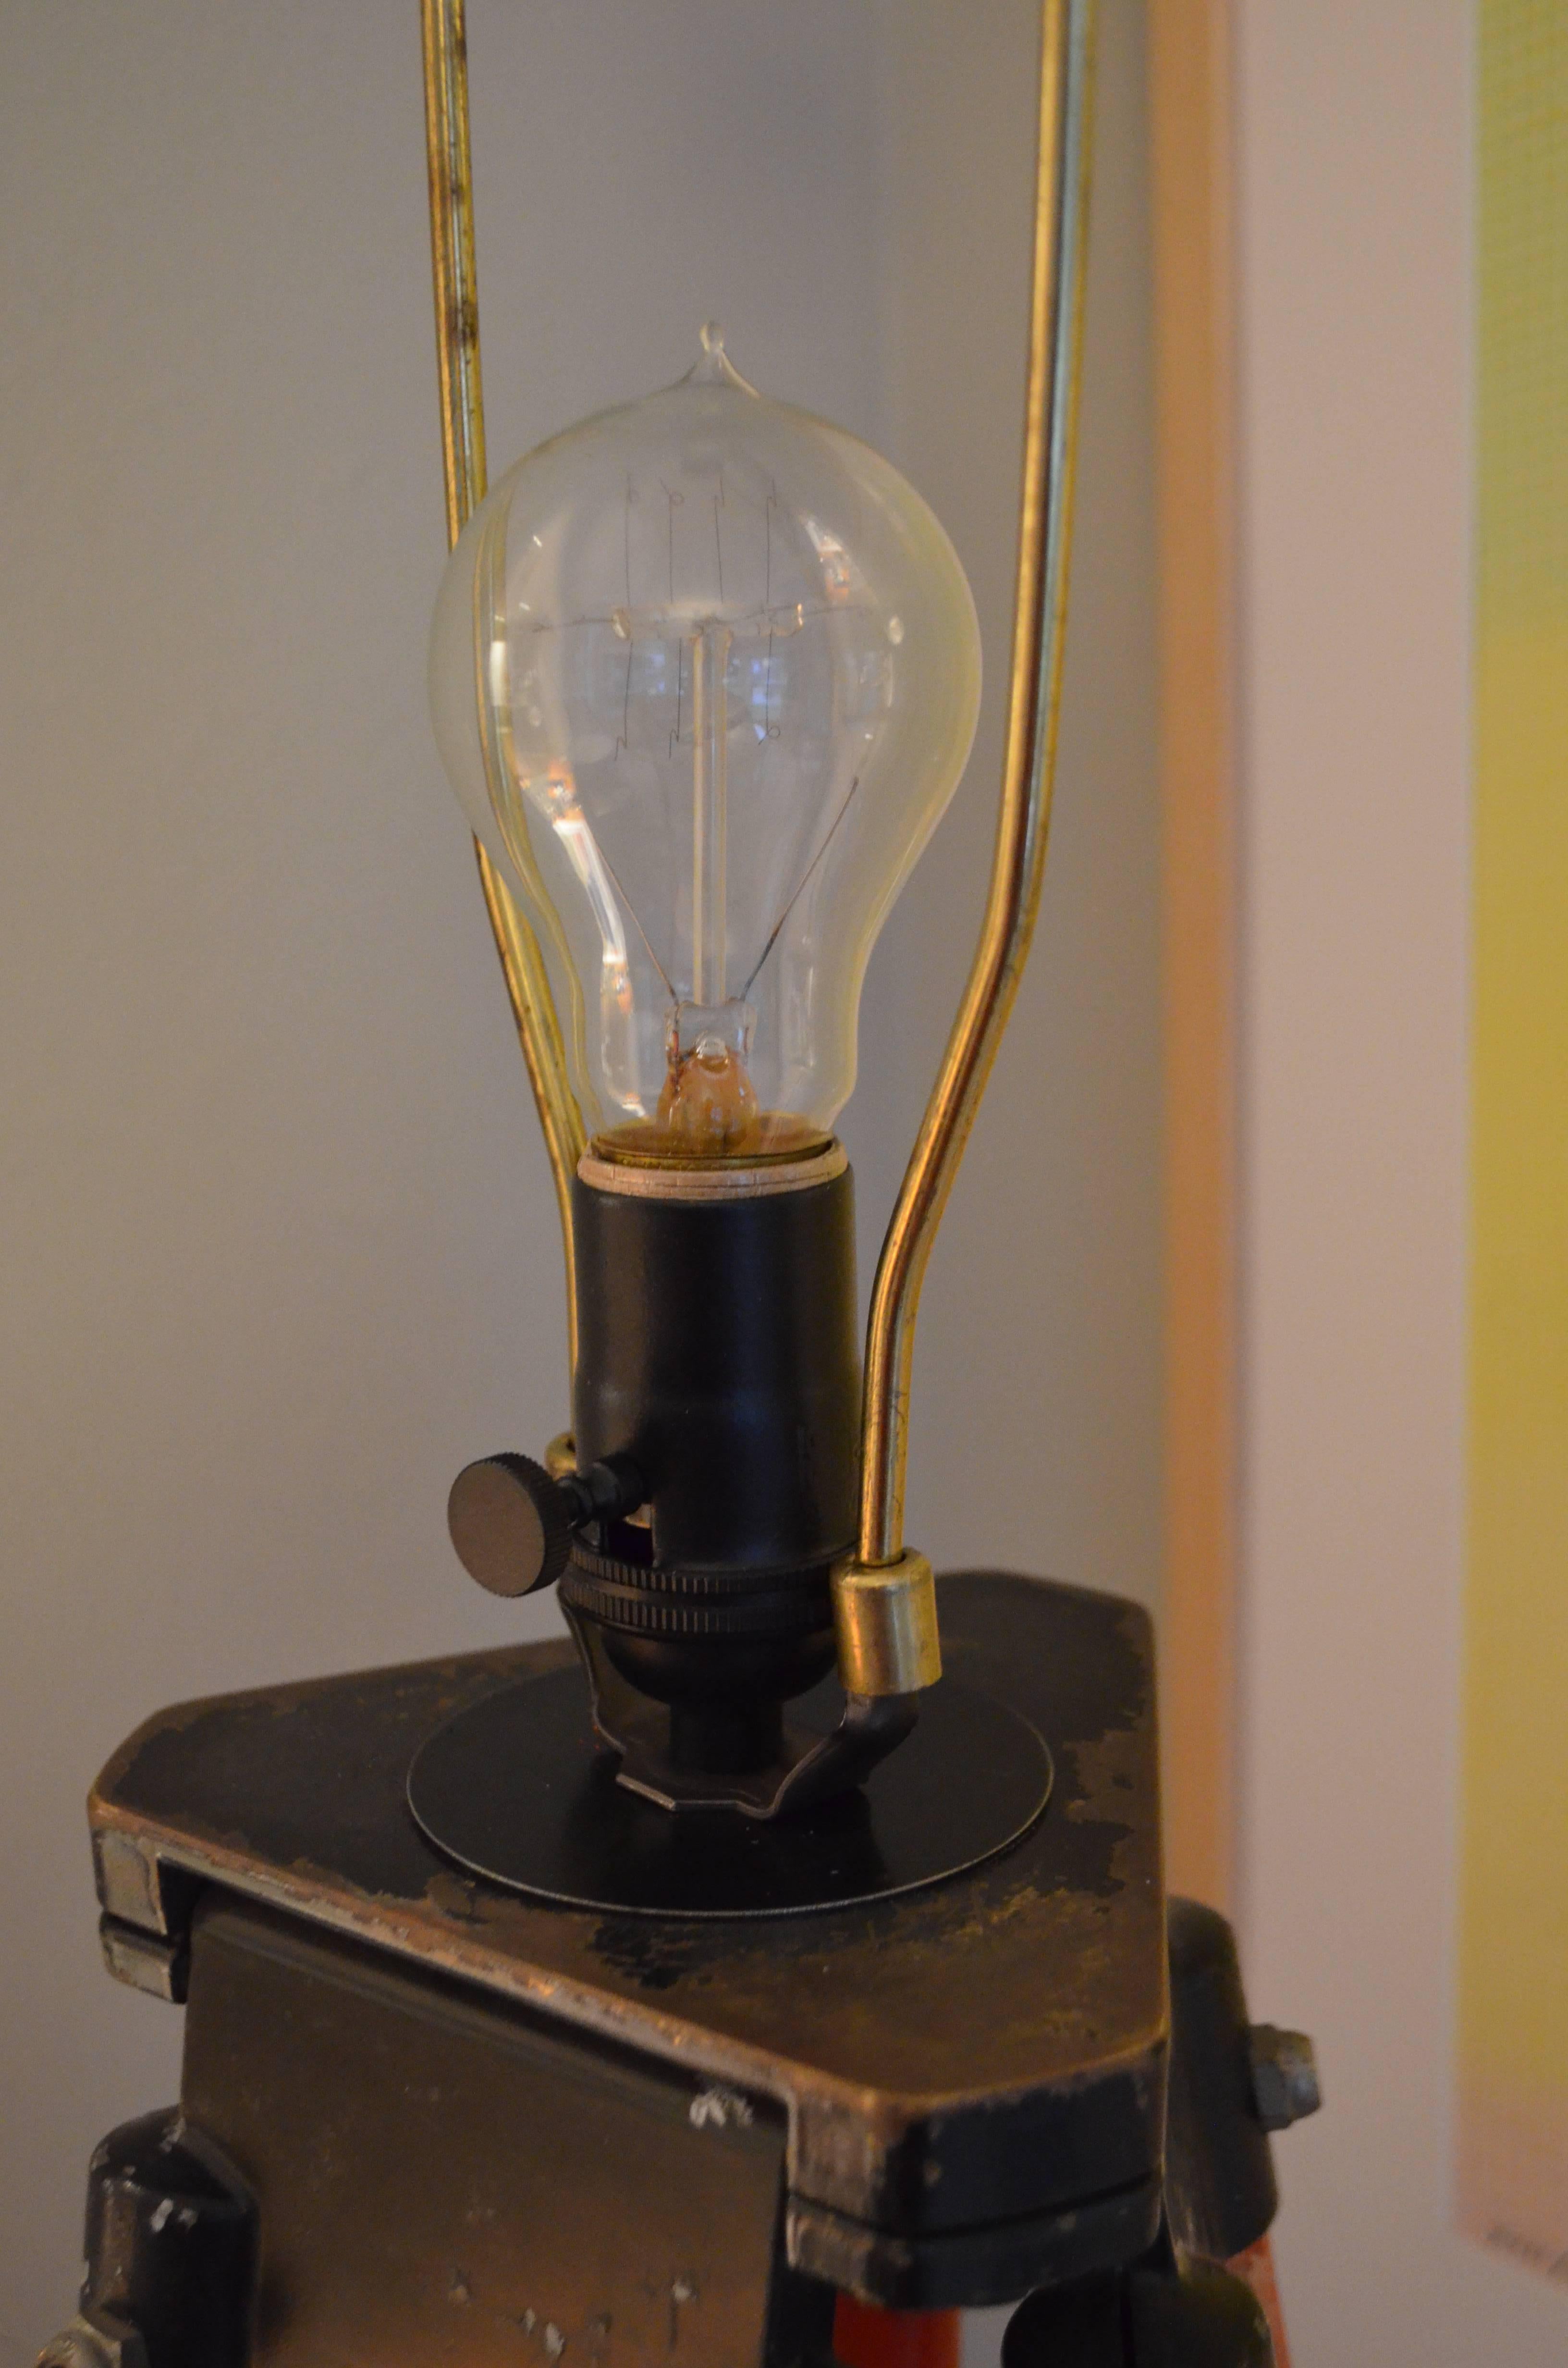 20th Century Floor Lamp Created from Surveyor Tripod in as-found Orange Paint